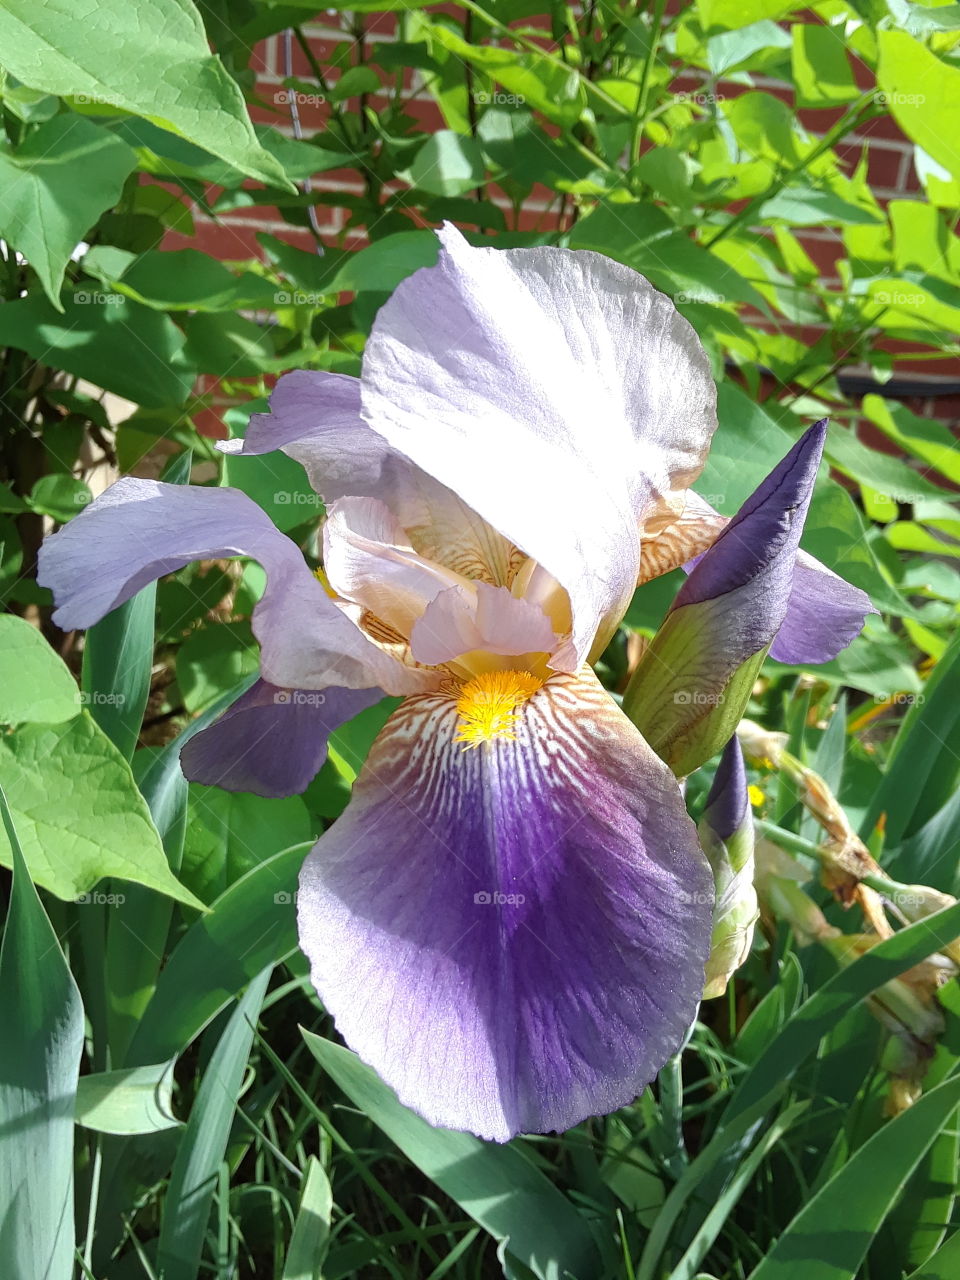 Purple Iris with yellow center